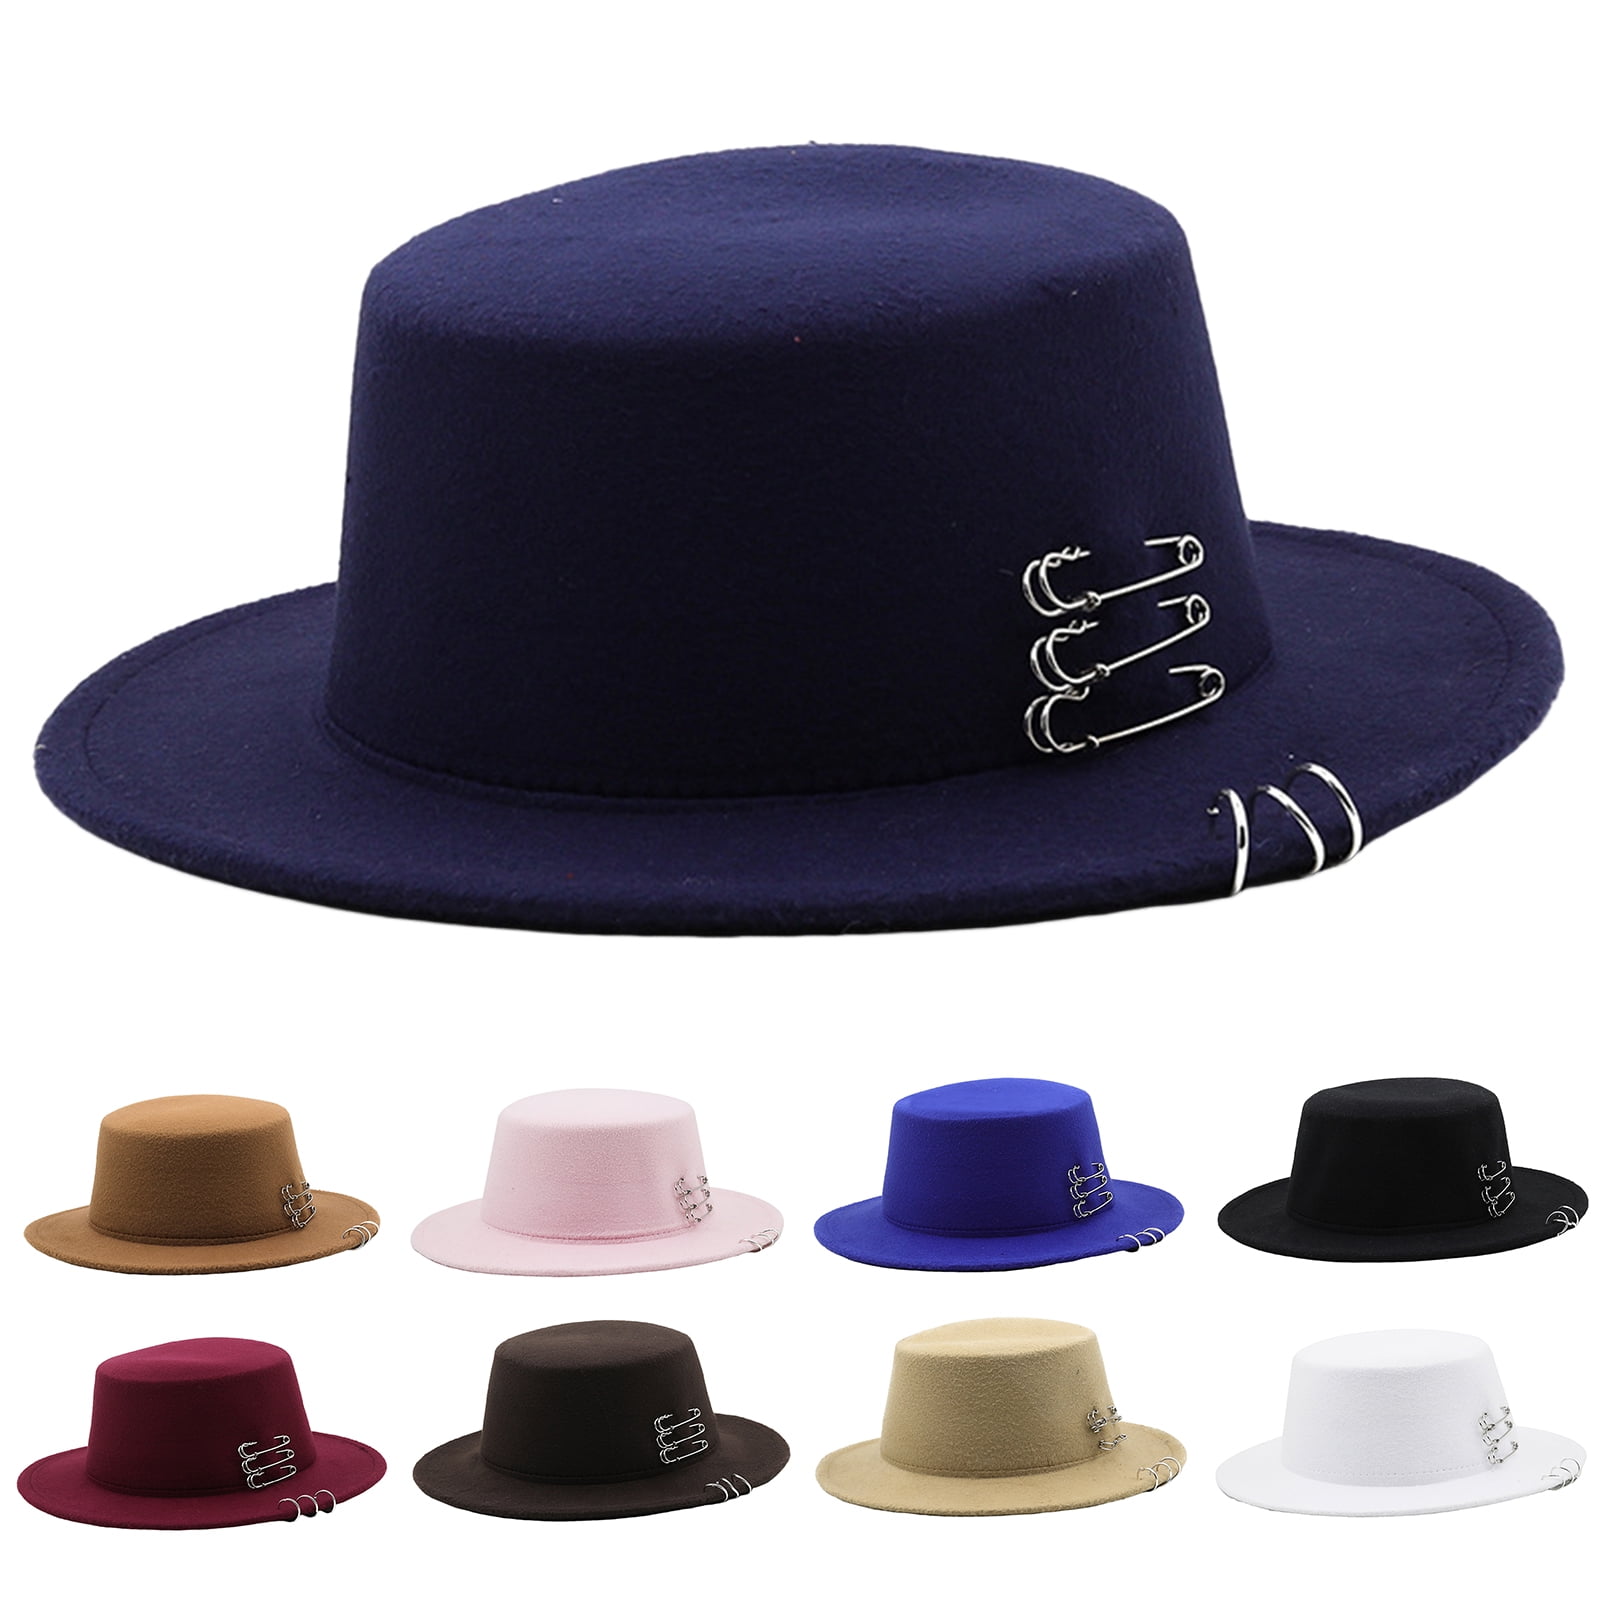 Fedora Hats for Men Women, Wide Brim Flat top Hats Boater Hat, Pin